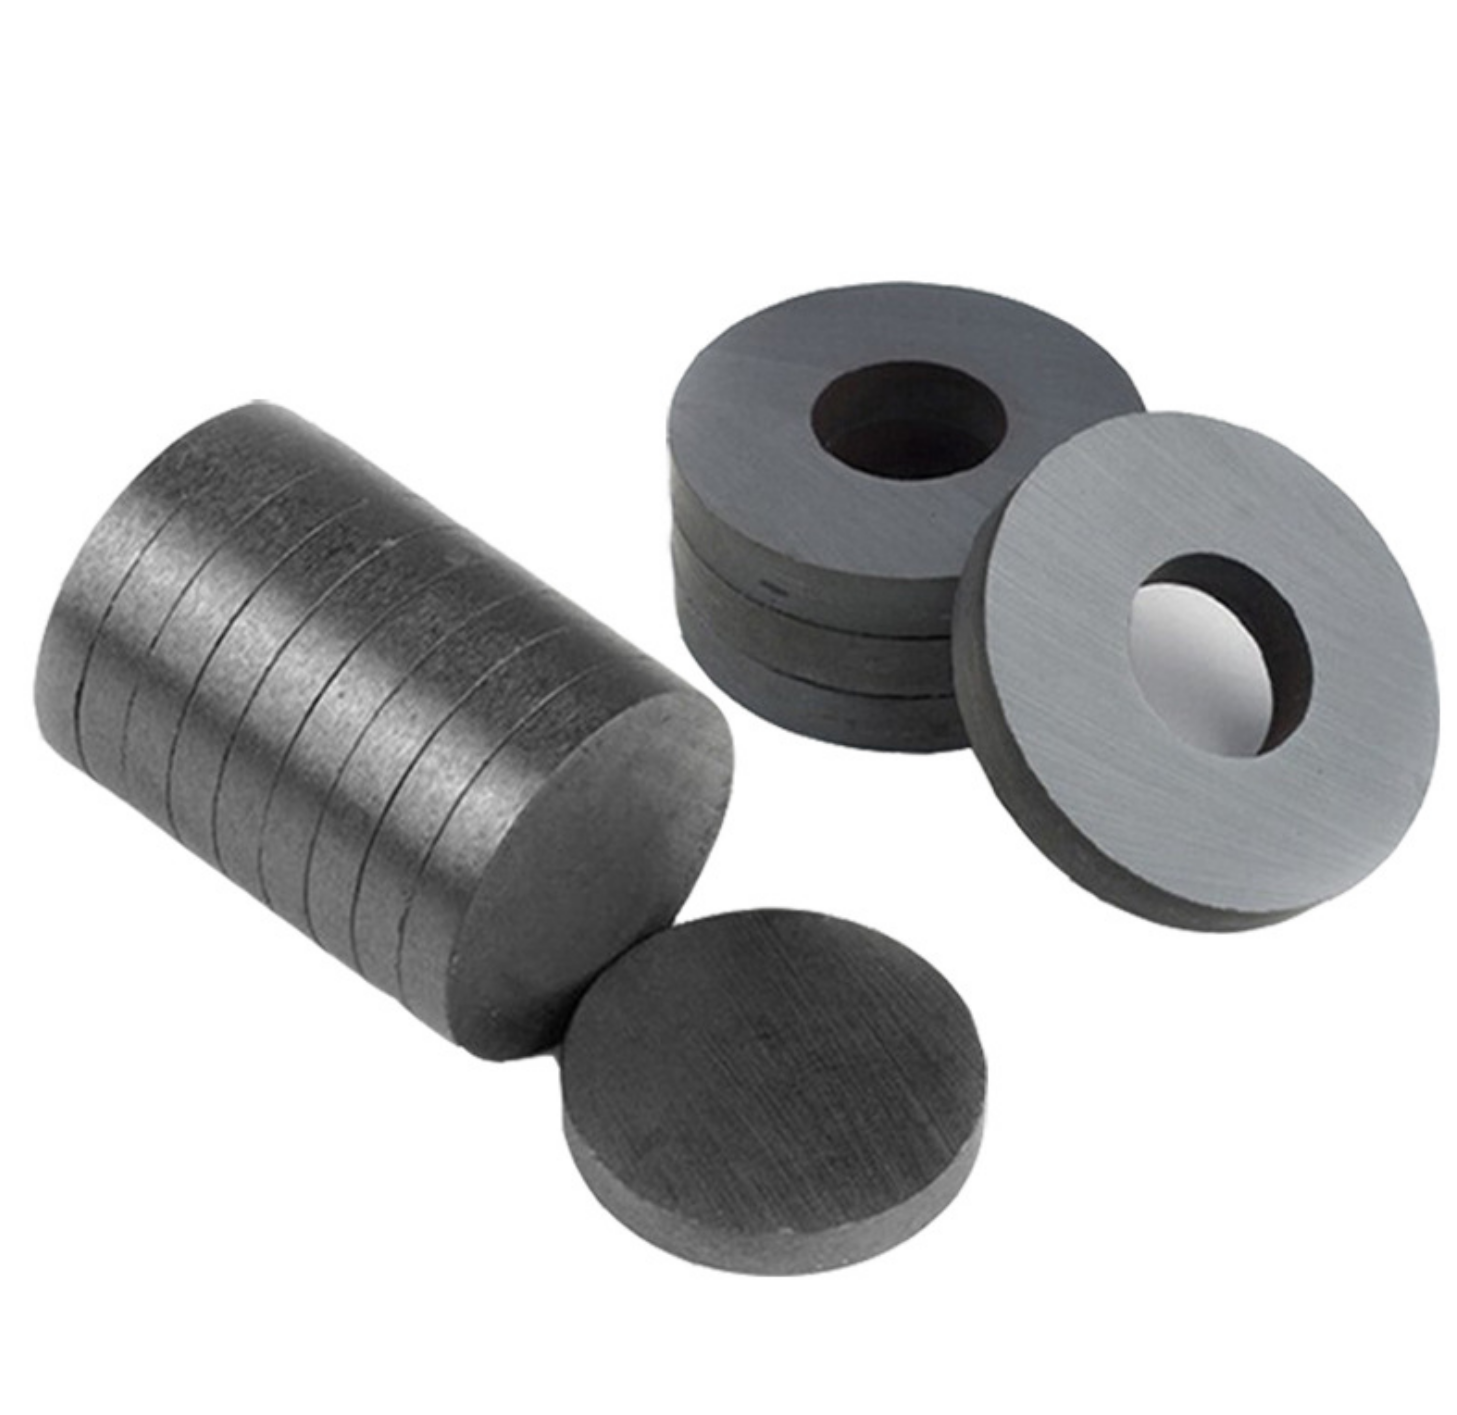 Single pole radial uni pole ring magnets D70x58x30mm N40H : AOMAG Magnetics